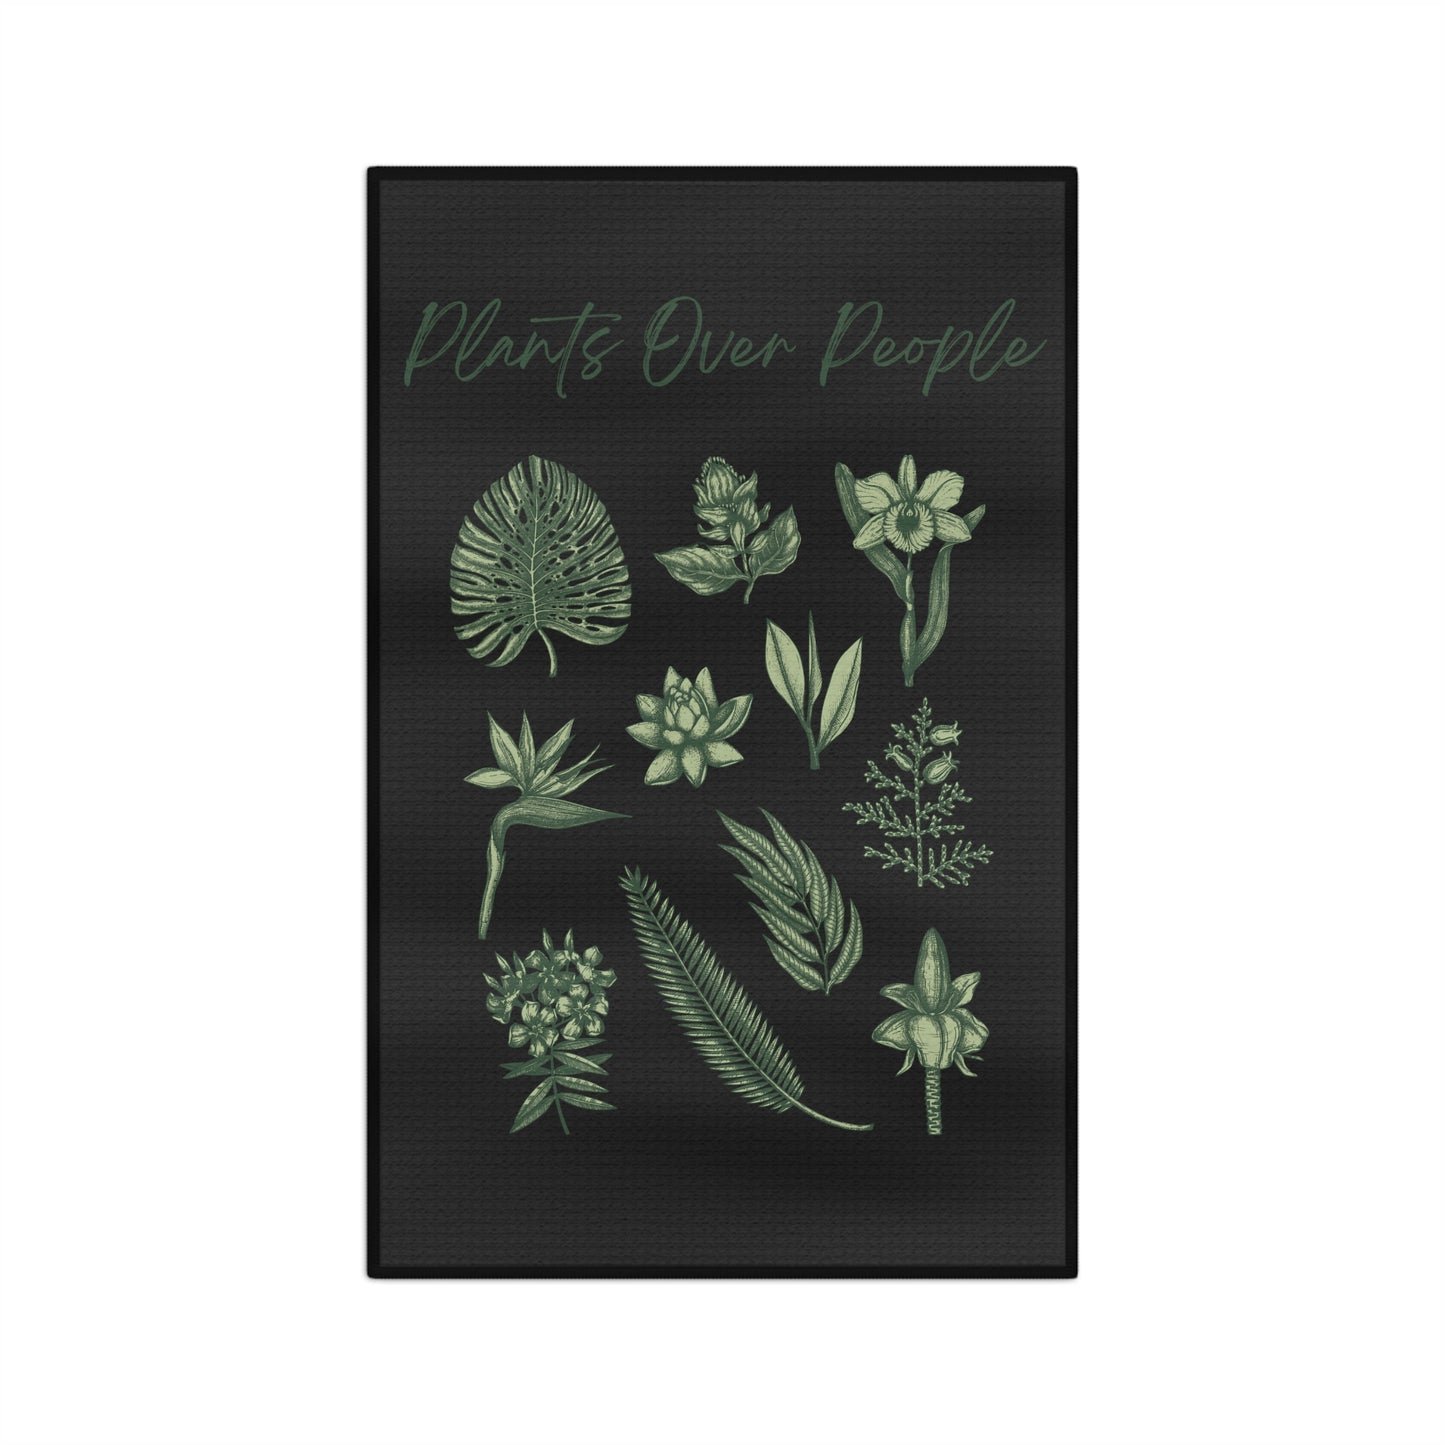 Plants Over People Tea Towel